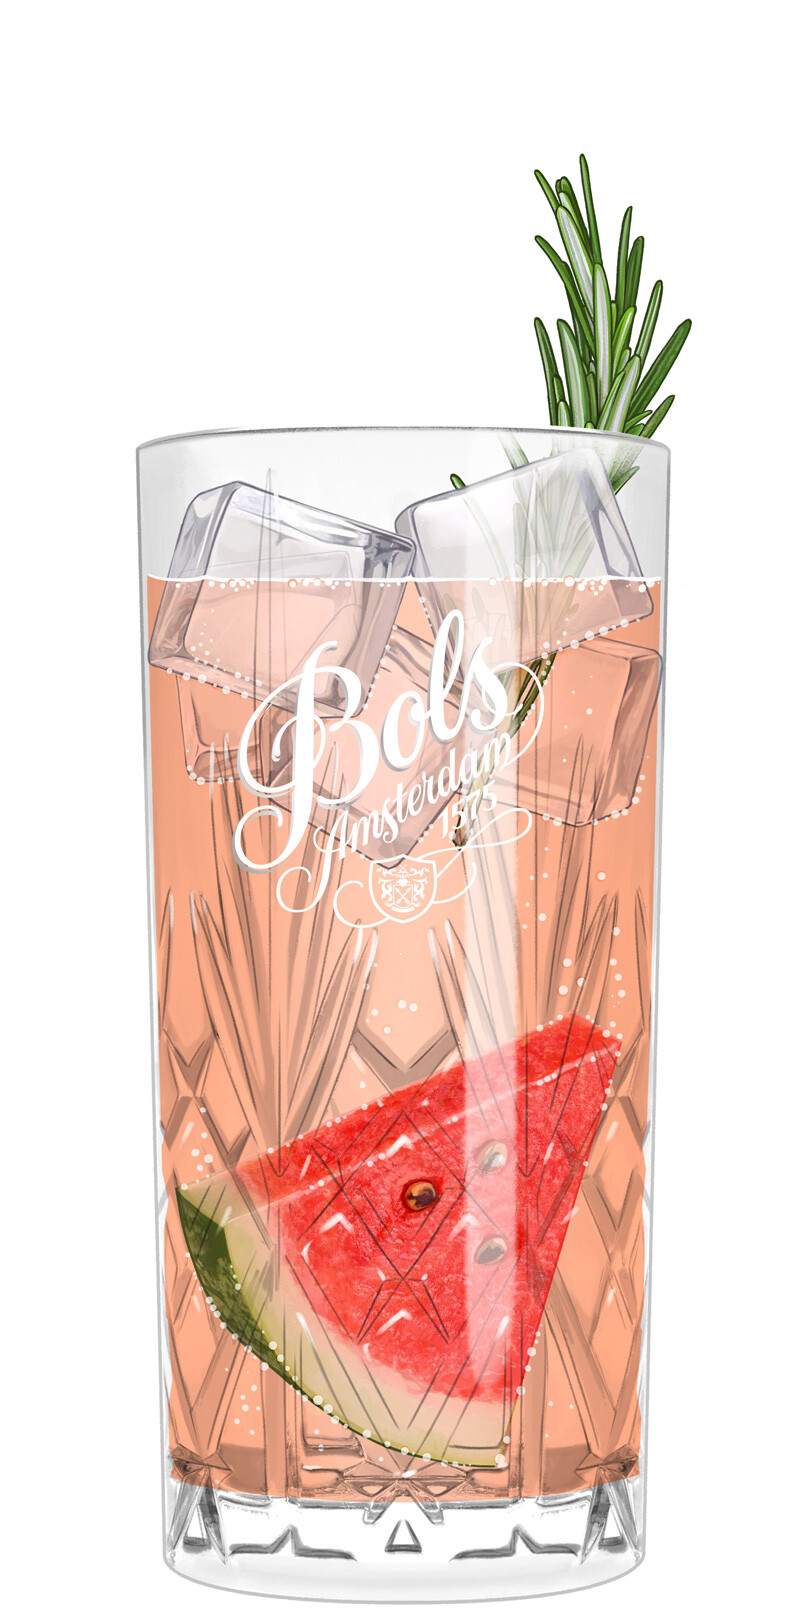 oculus-illustration-drink-aperitiv-watermelon